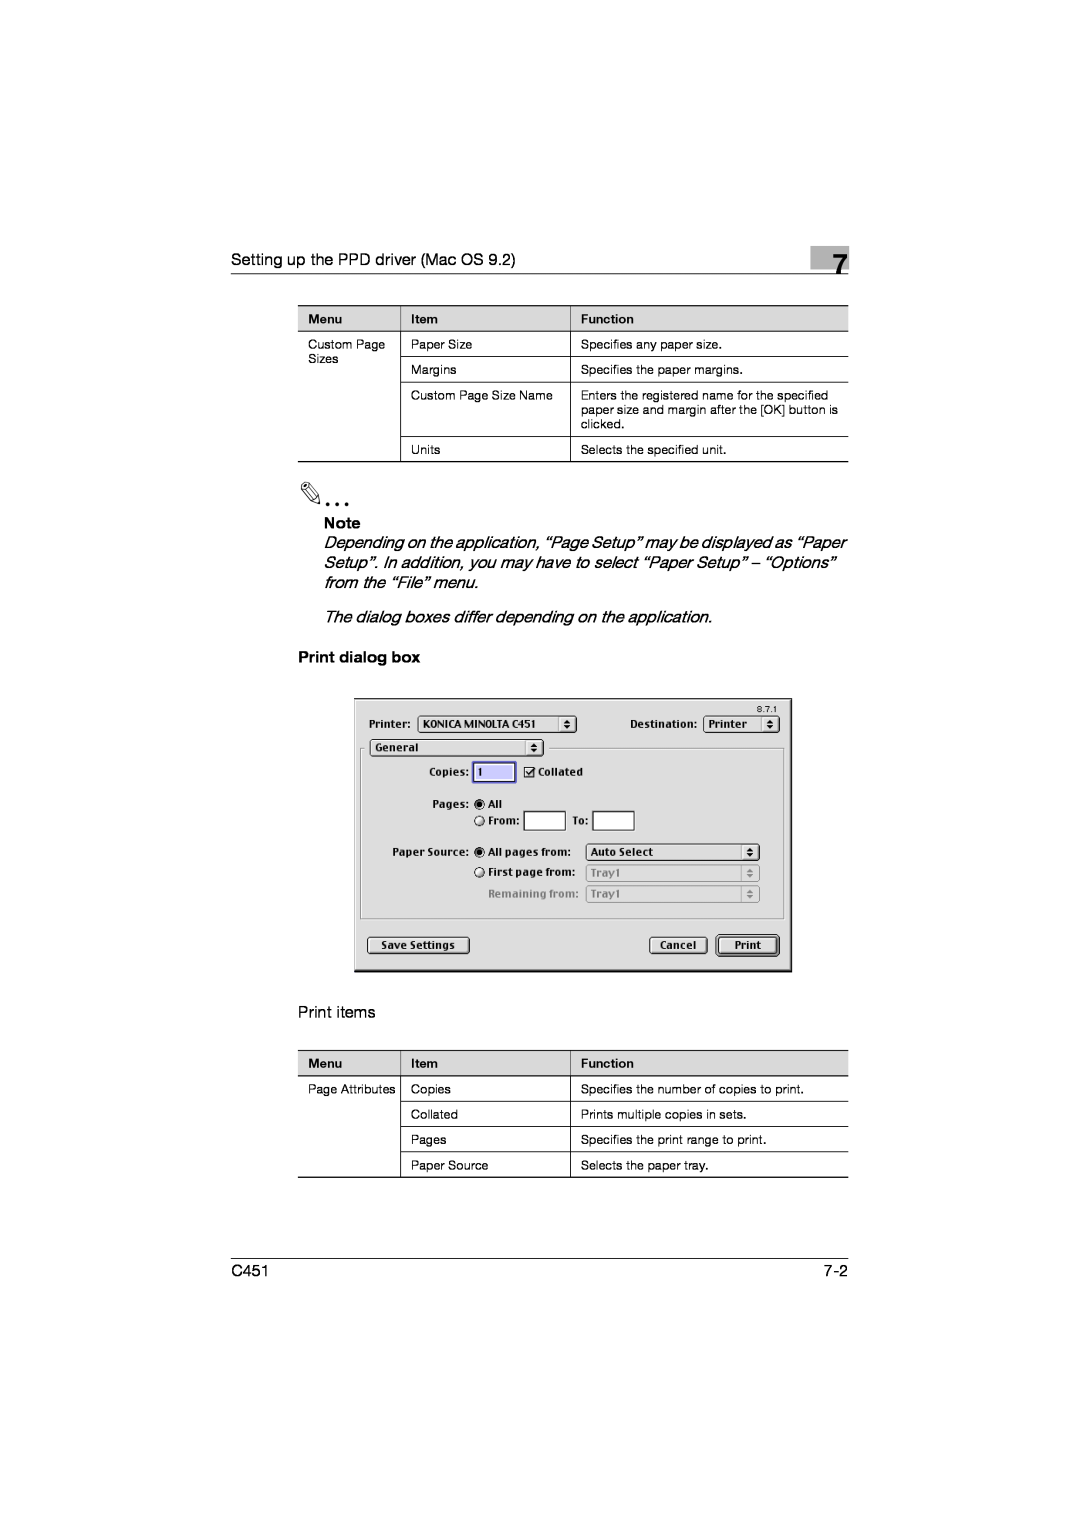 Konica Minolta C451 manual Setting up the PPD driver Mac OS, Print dialog box, Print items 